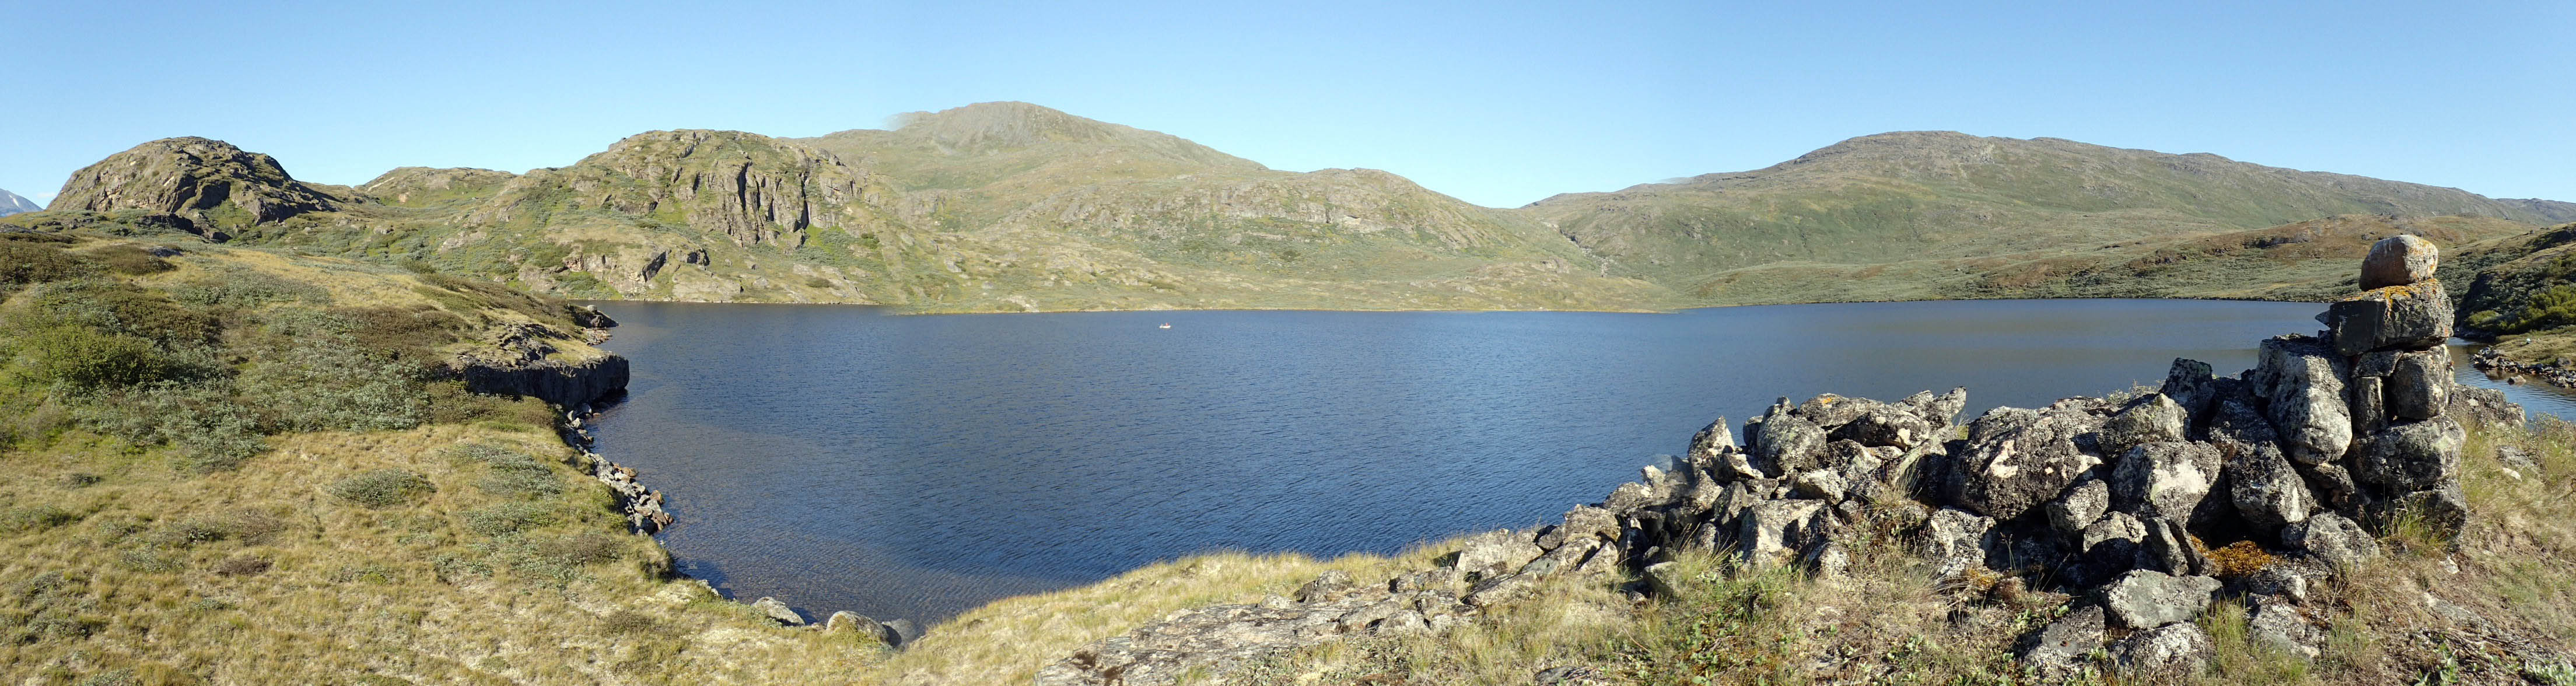 Human Traces lake image